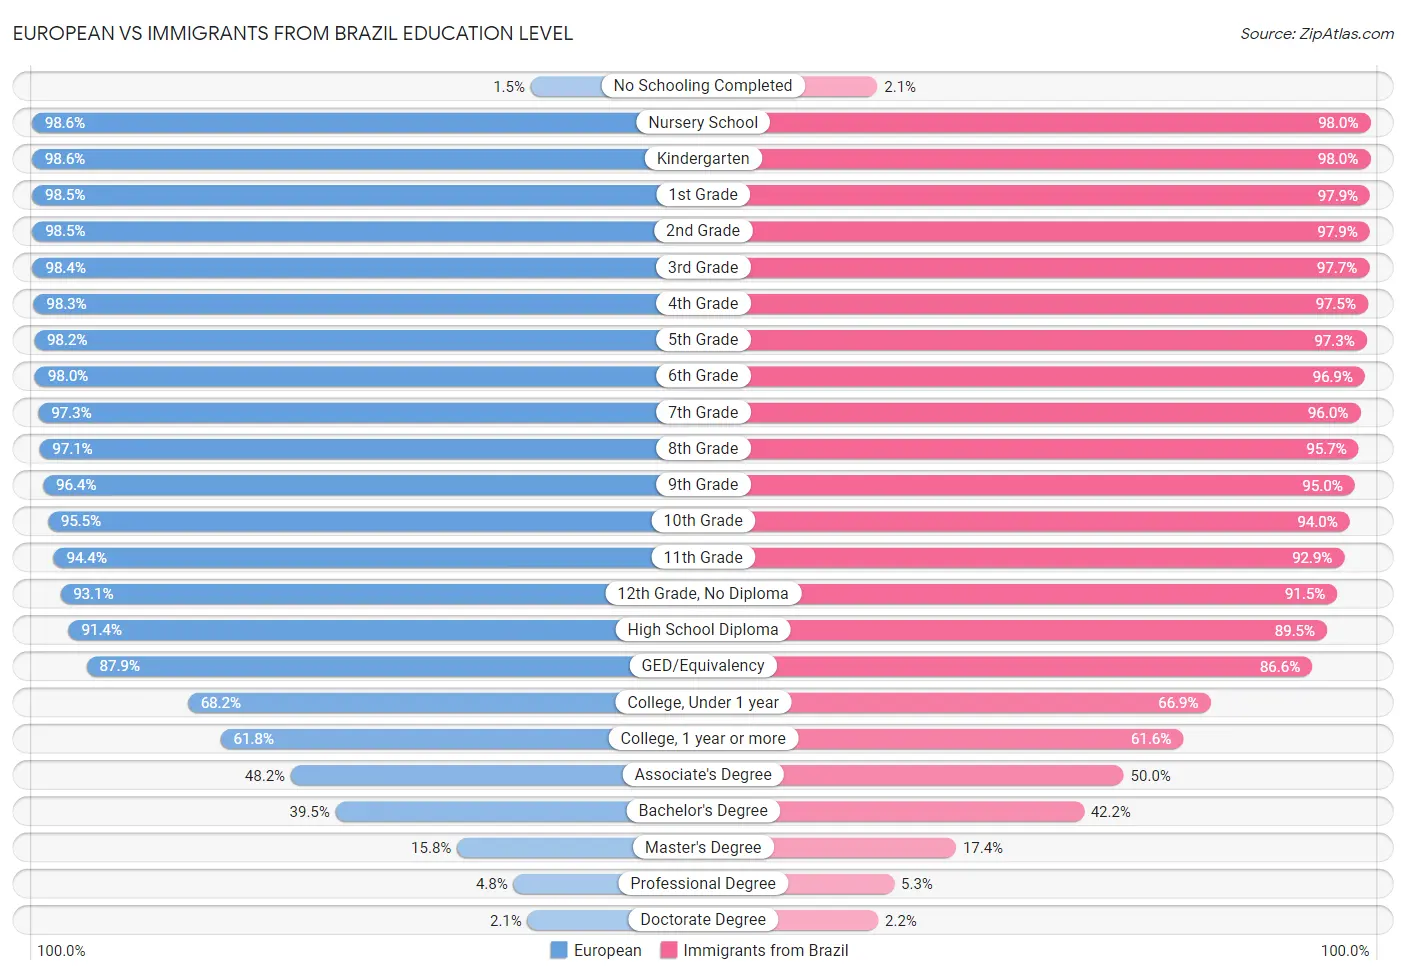 European vs Immigrants from Brazil Education Level